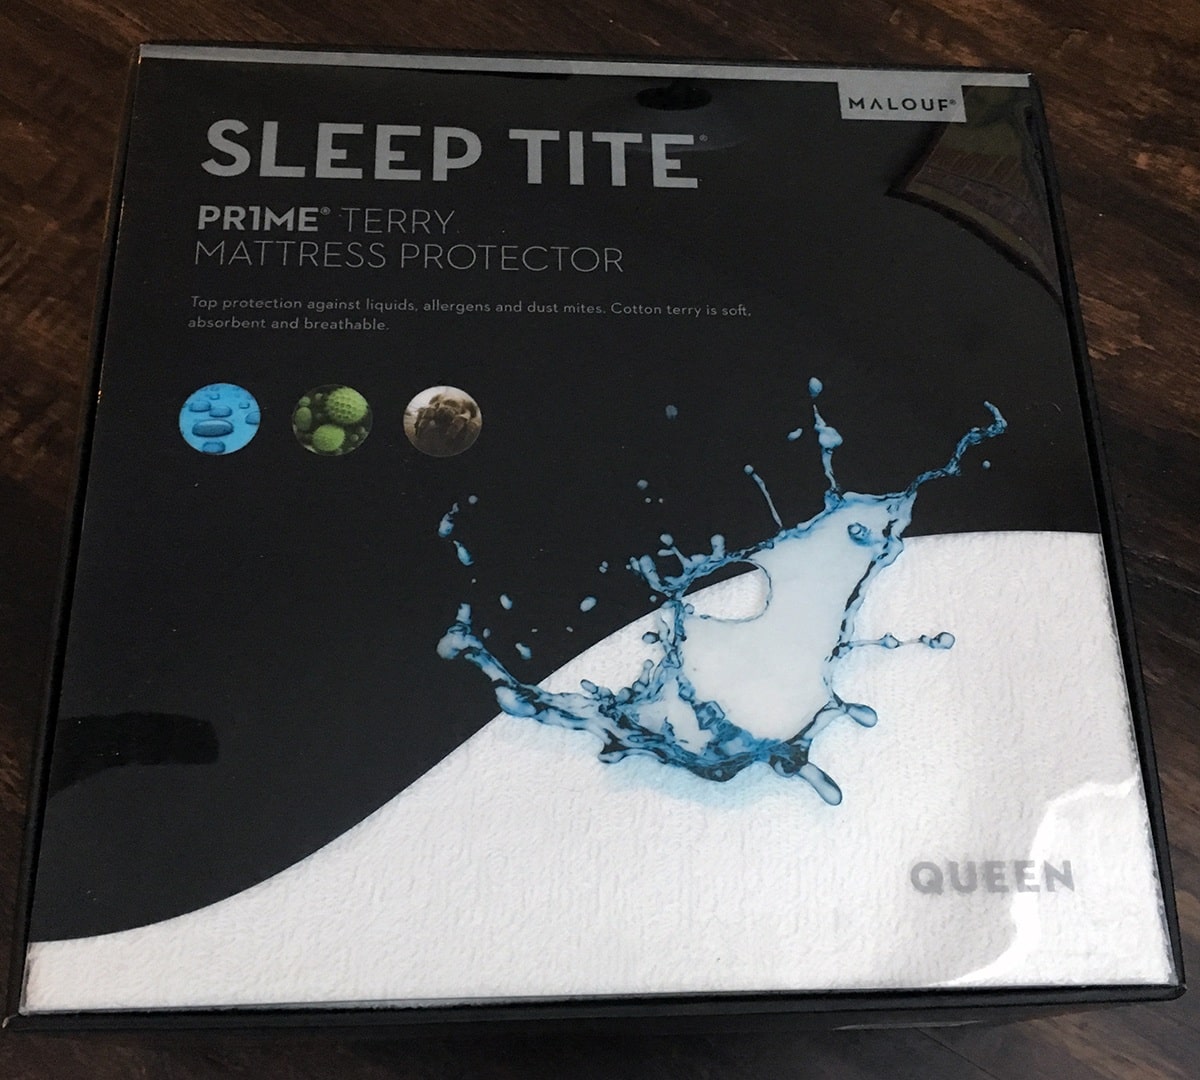 Sleep Tite Pr1me Mattress Protector Review